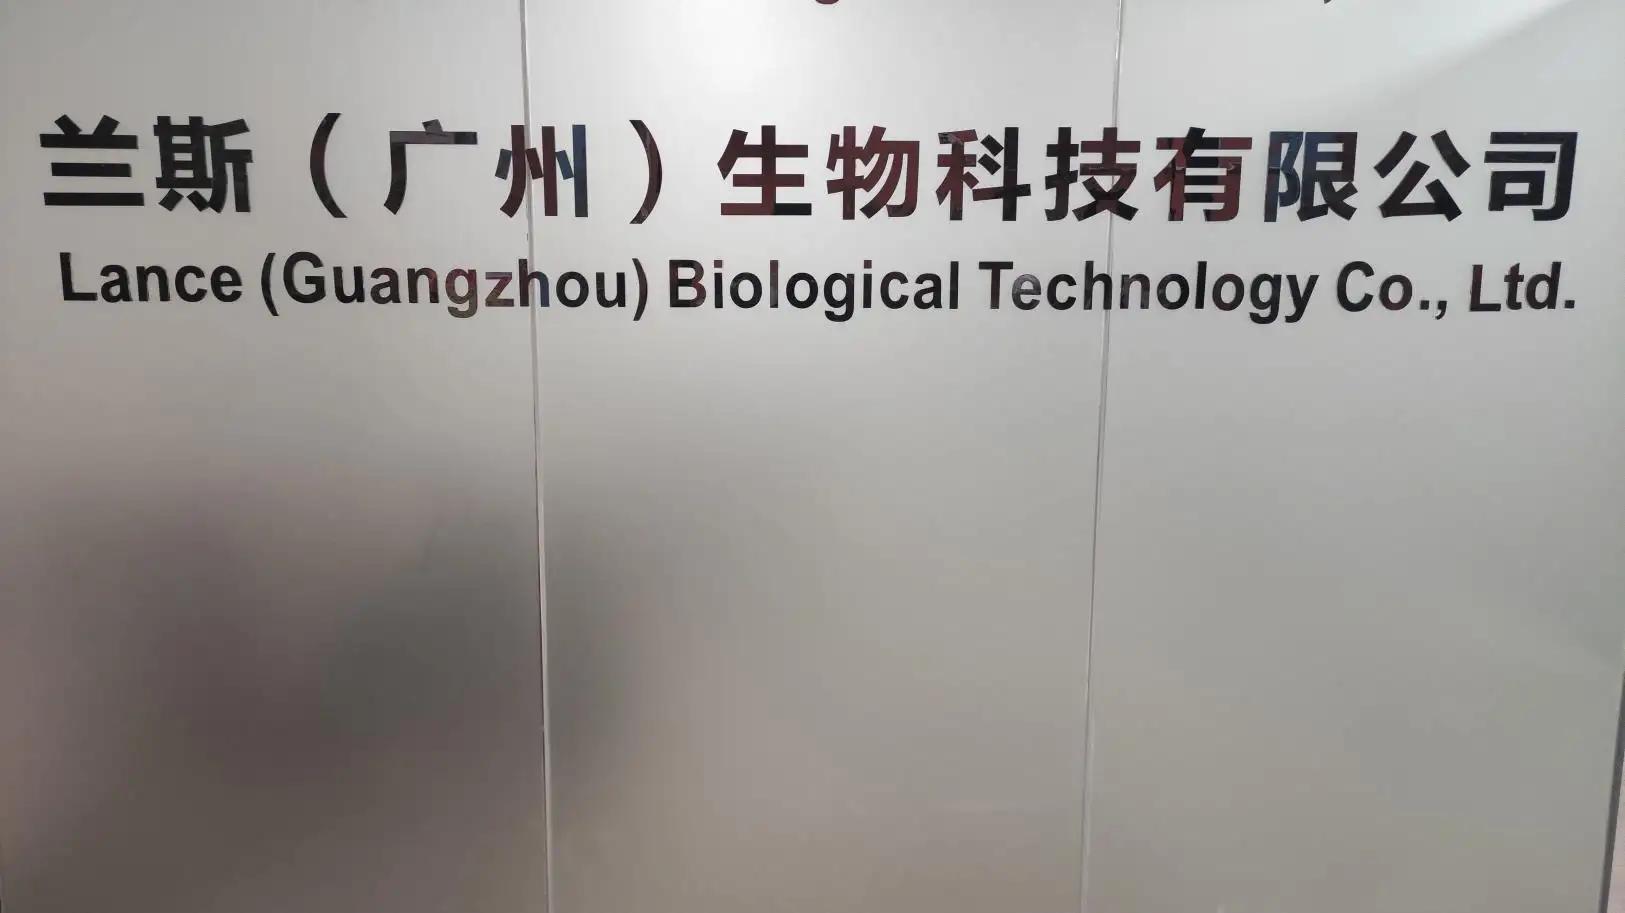 Lance (Guangzhou) Biological Technology Co., Ltd.